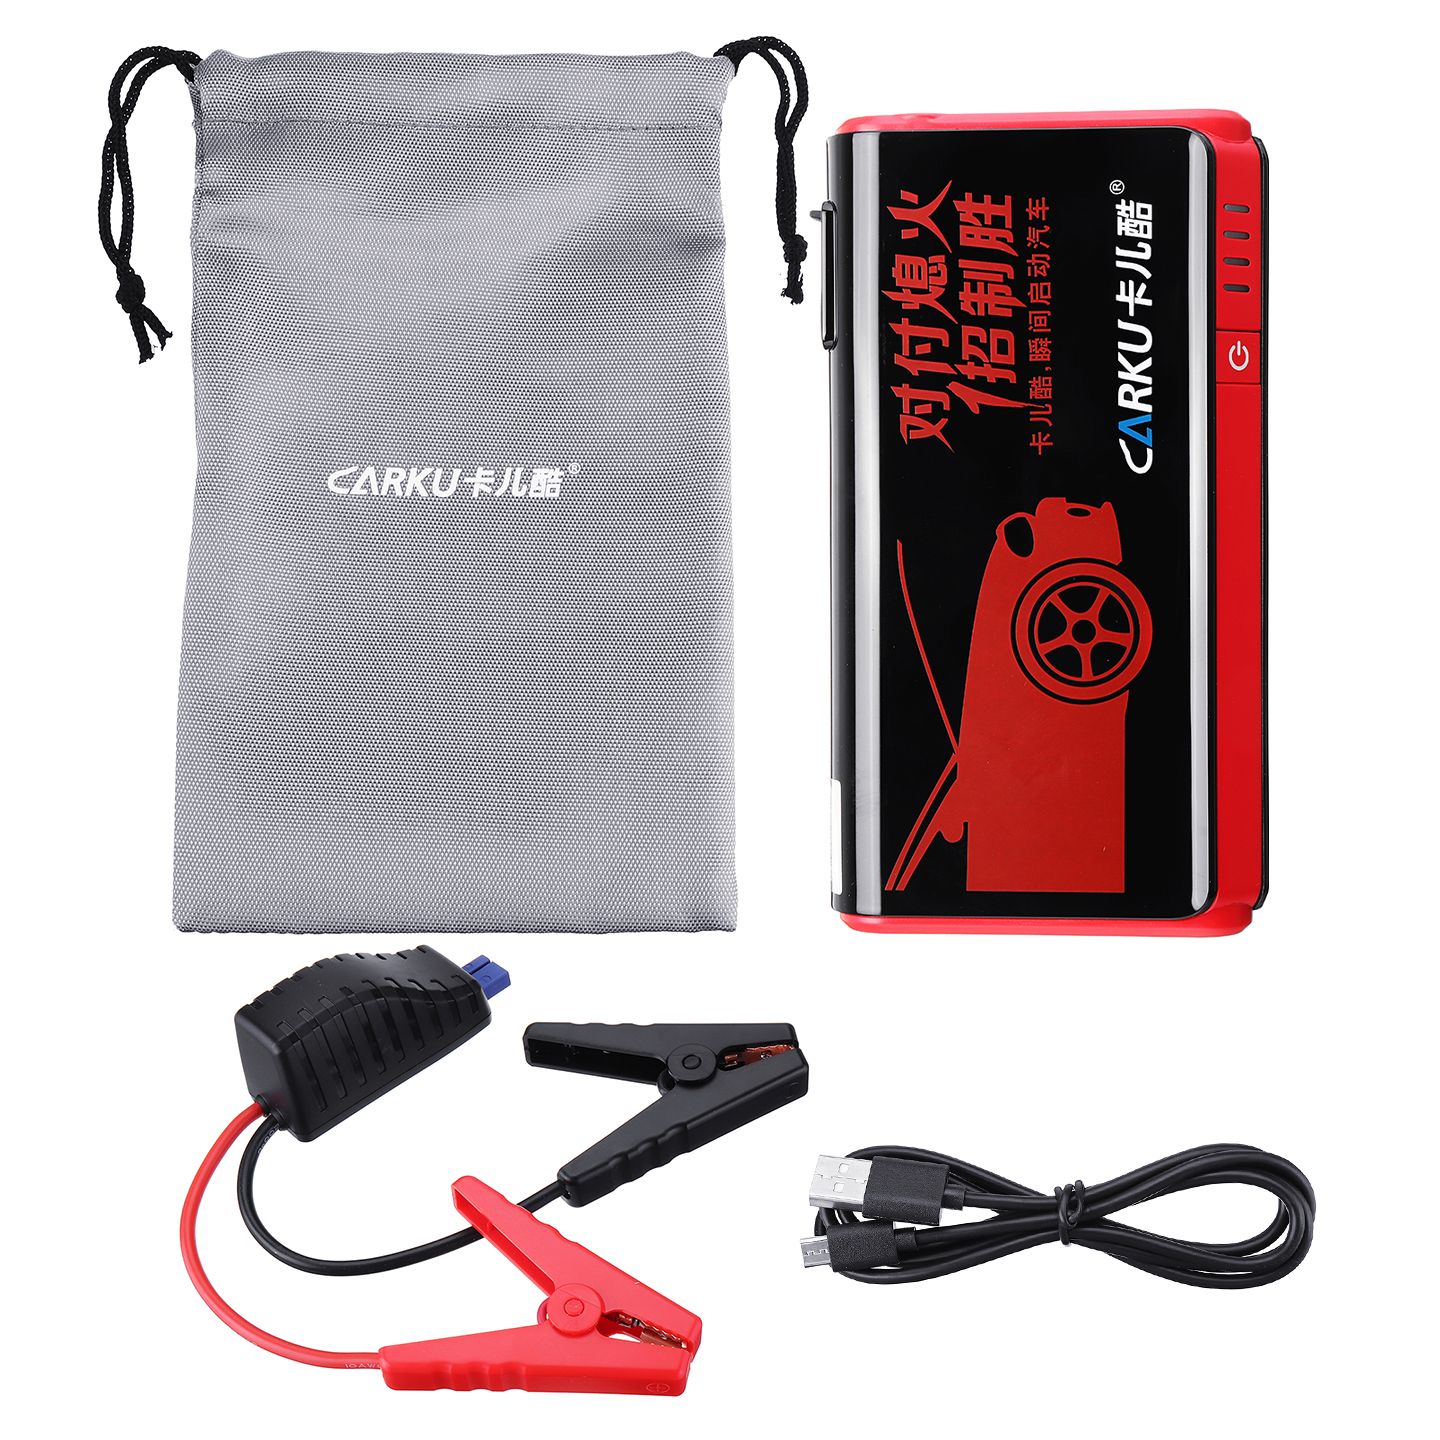 CARKU-X3-Portable-Car-Jump-Starter-12V-9000mAh-Emergency-Battery-Booster-with-QC-30-LED-FlashLight-f-1520028